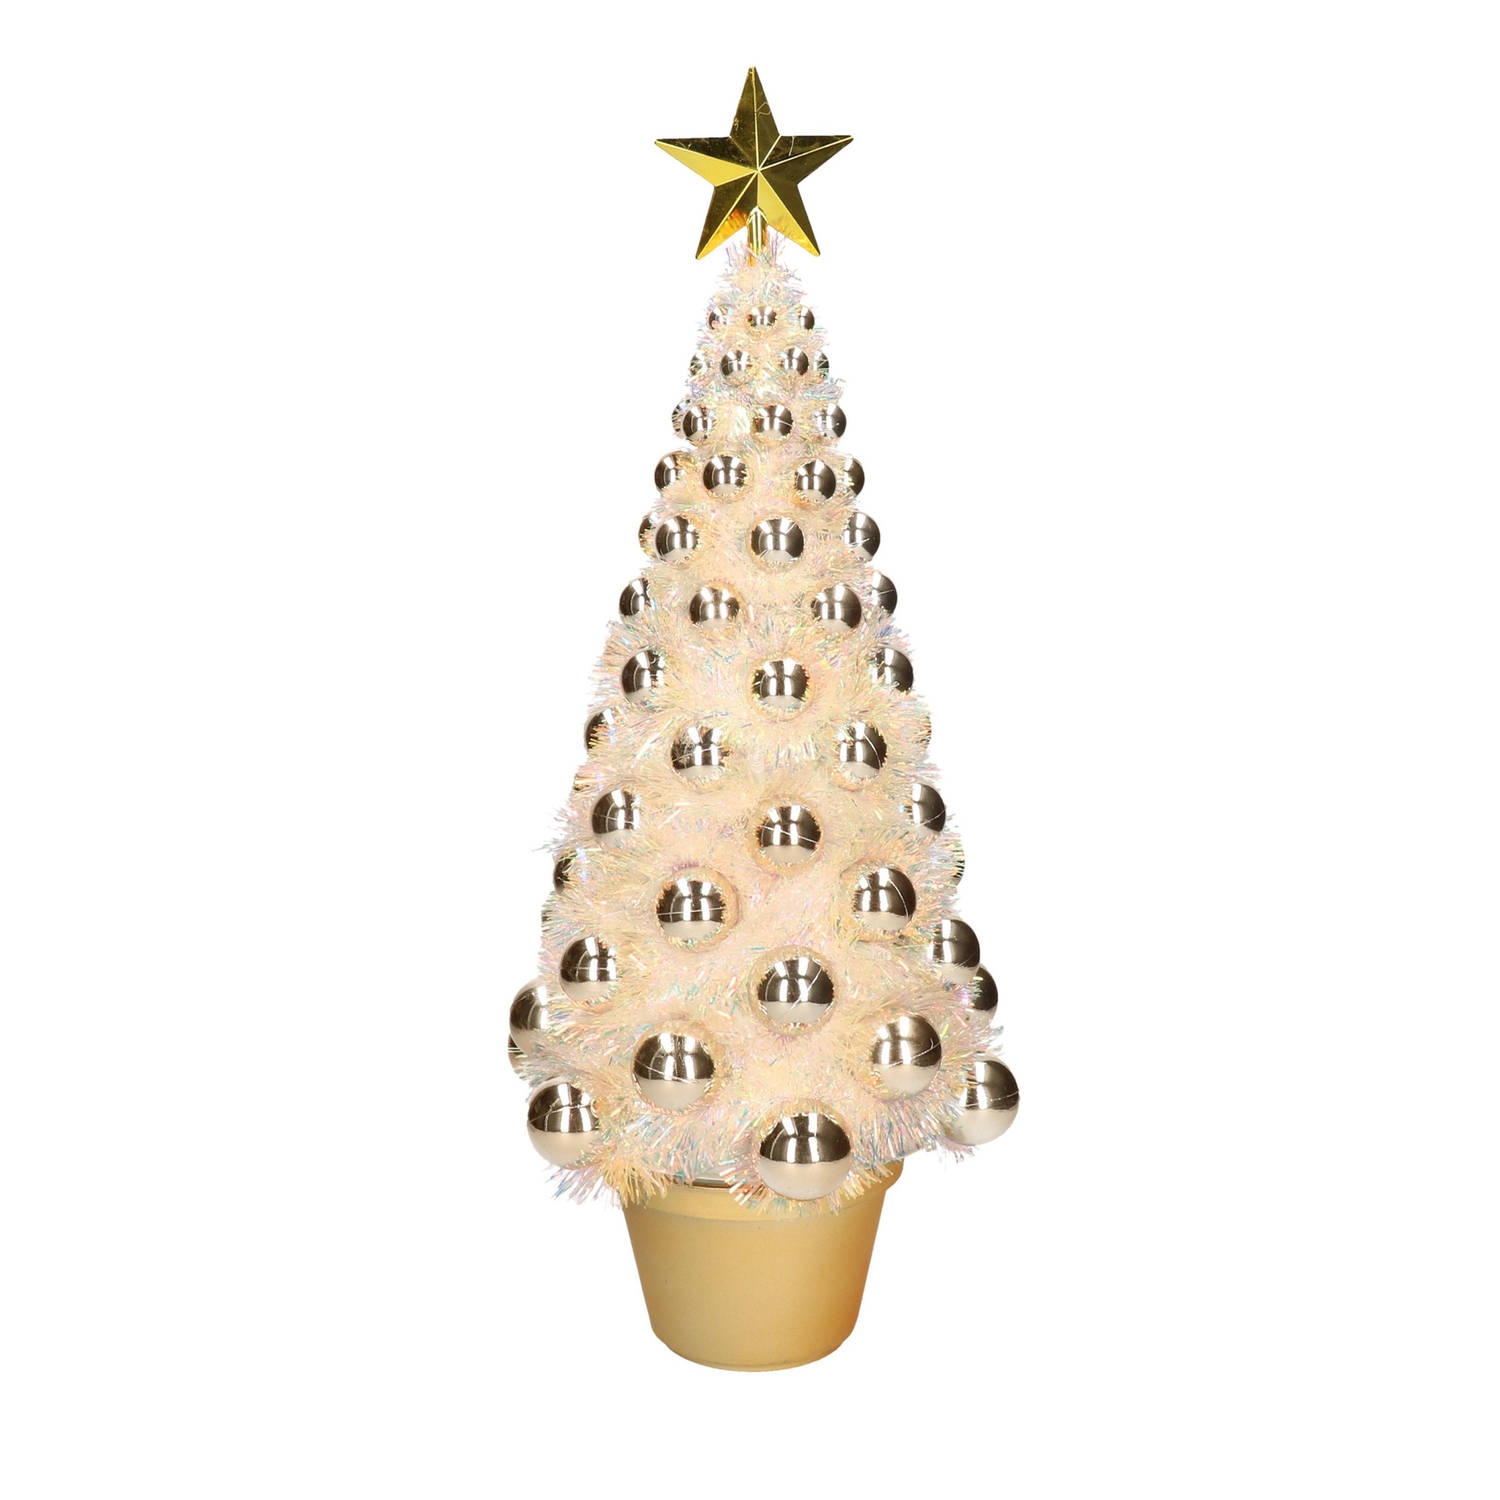 Raad Accor rand Complete mini kunst kerstboom / kunstboom goud met lichtjes 50 cm -  Kunstkerstboom | Blokker